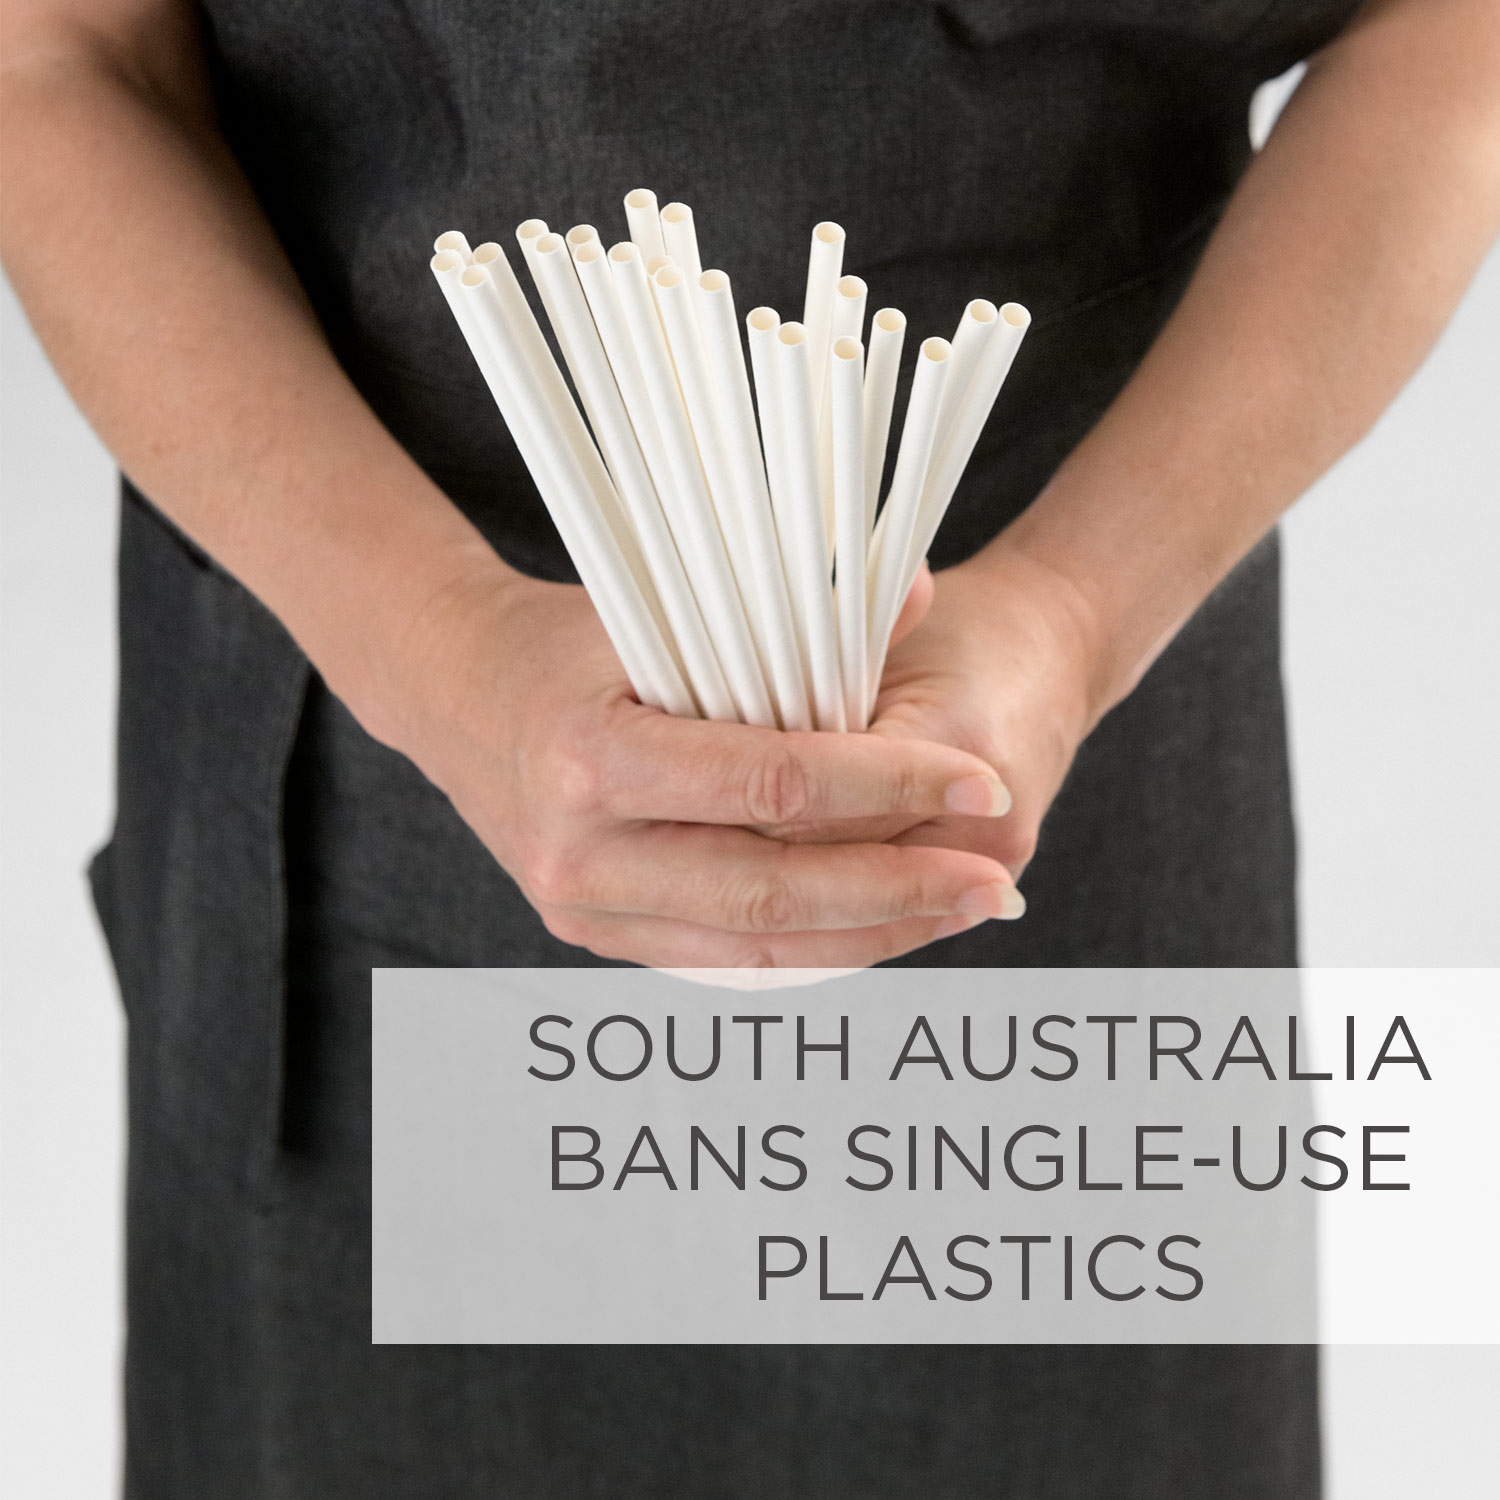 Image of paper Endura straws and text South Australia bans single use plastics 